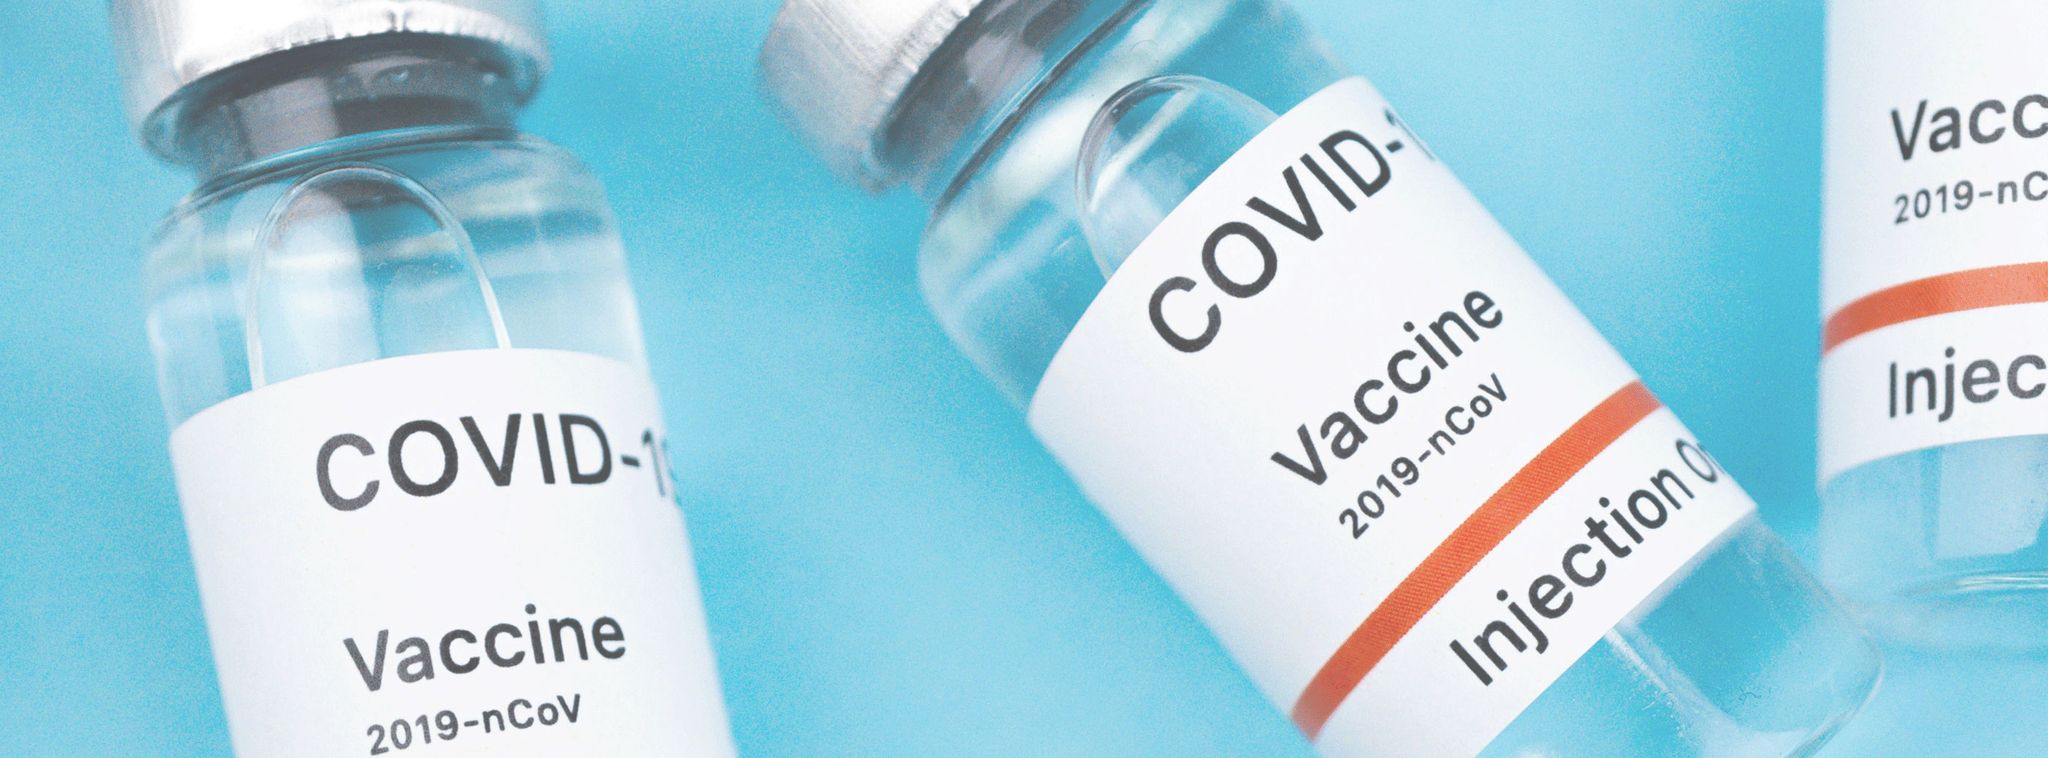 Corona-Impfung bei Kindern